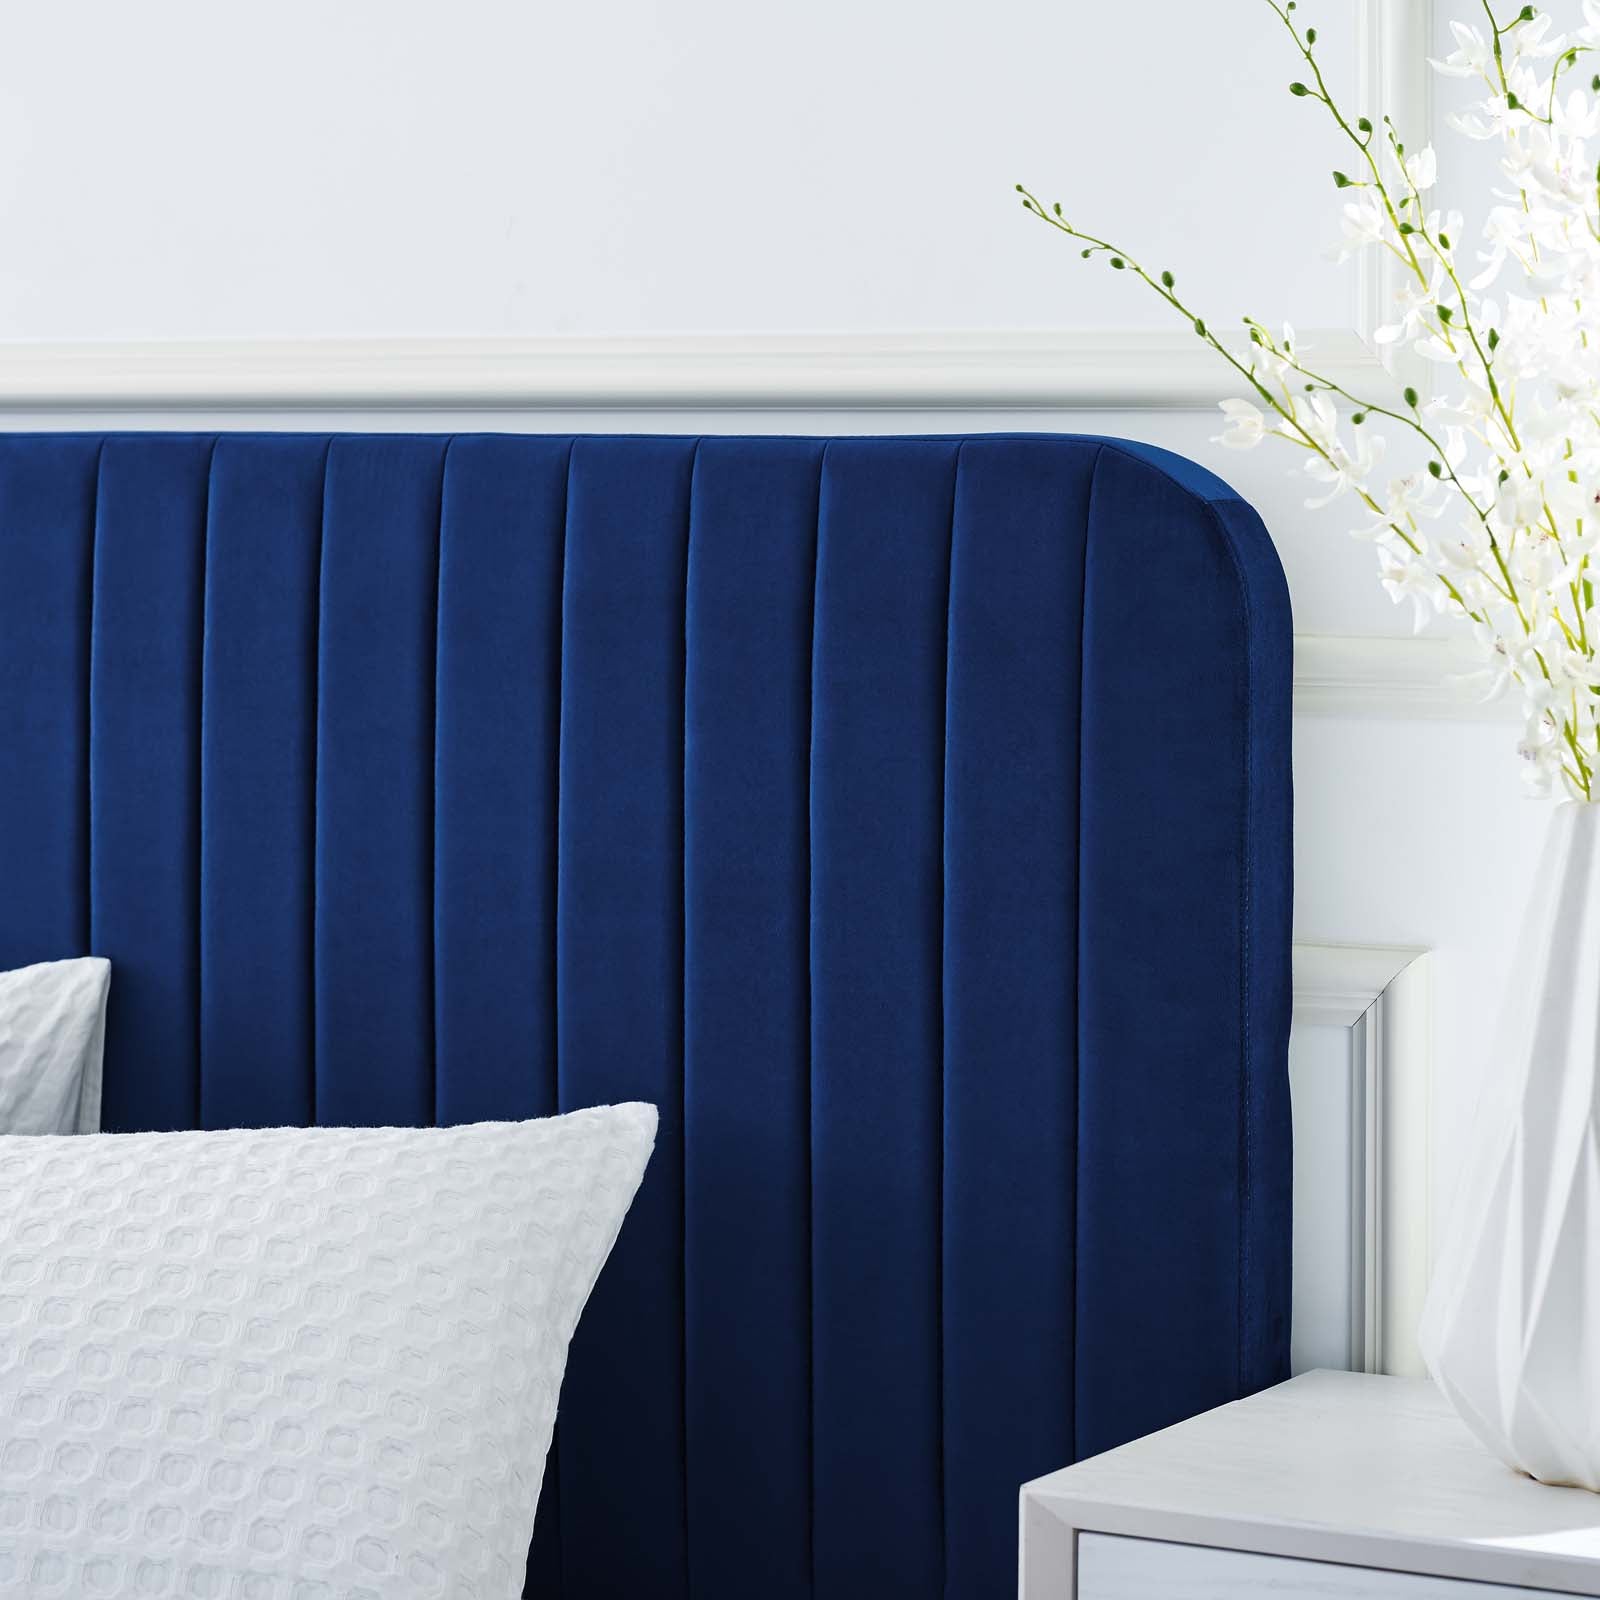 Celine Channel Tufted Performance Velvet Platform Bed - East Shore Modern Home Furnishings